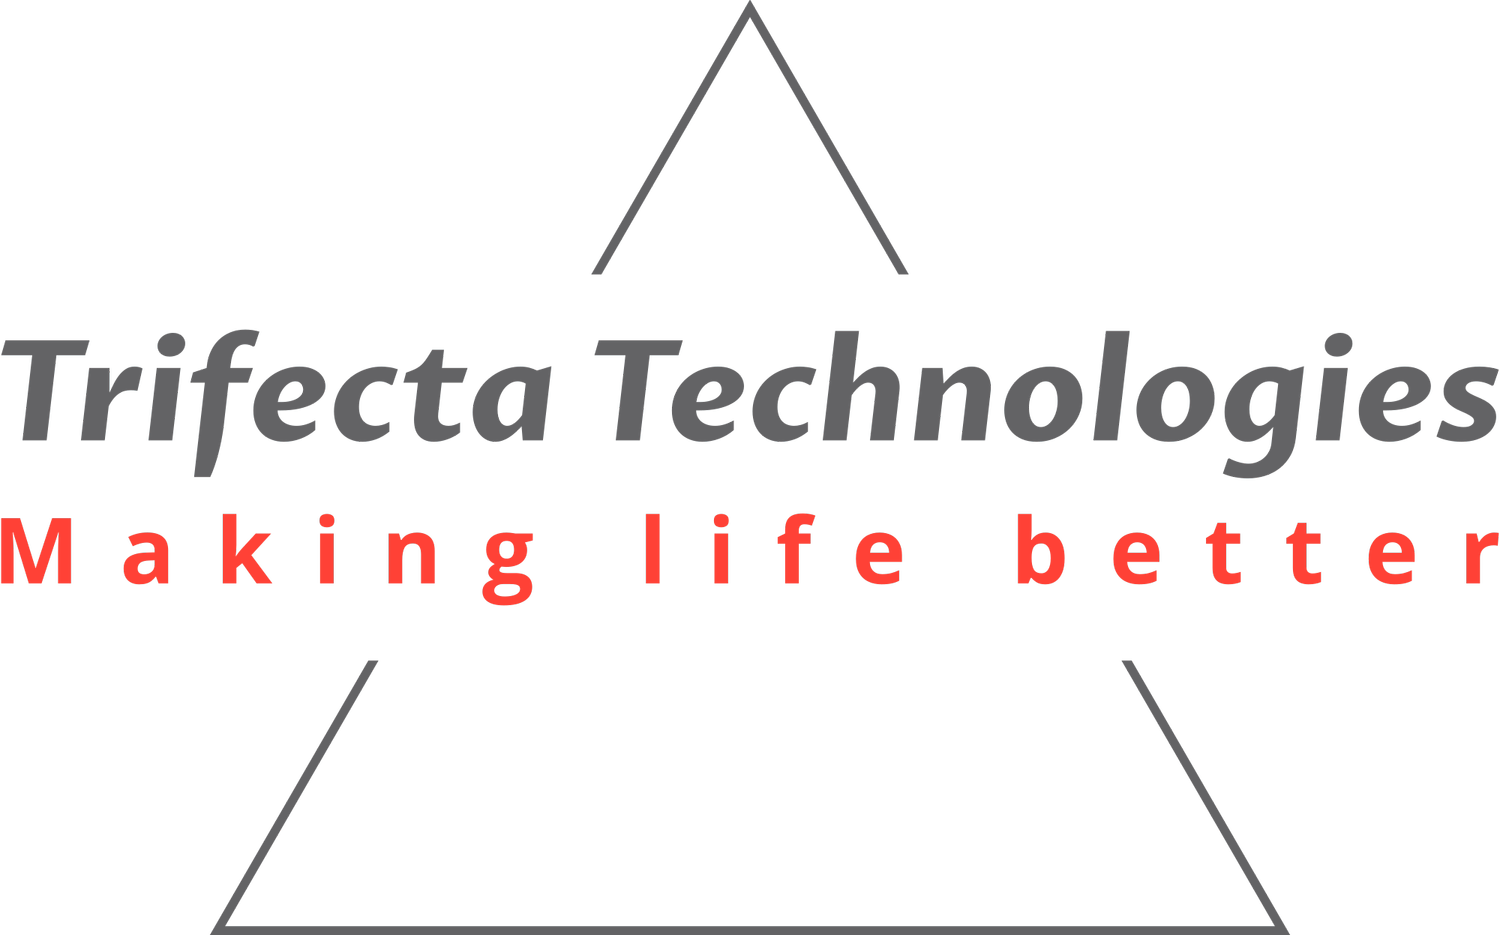 Trifecta Technology